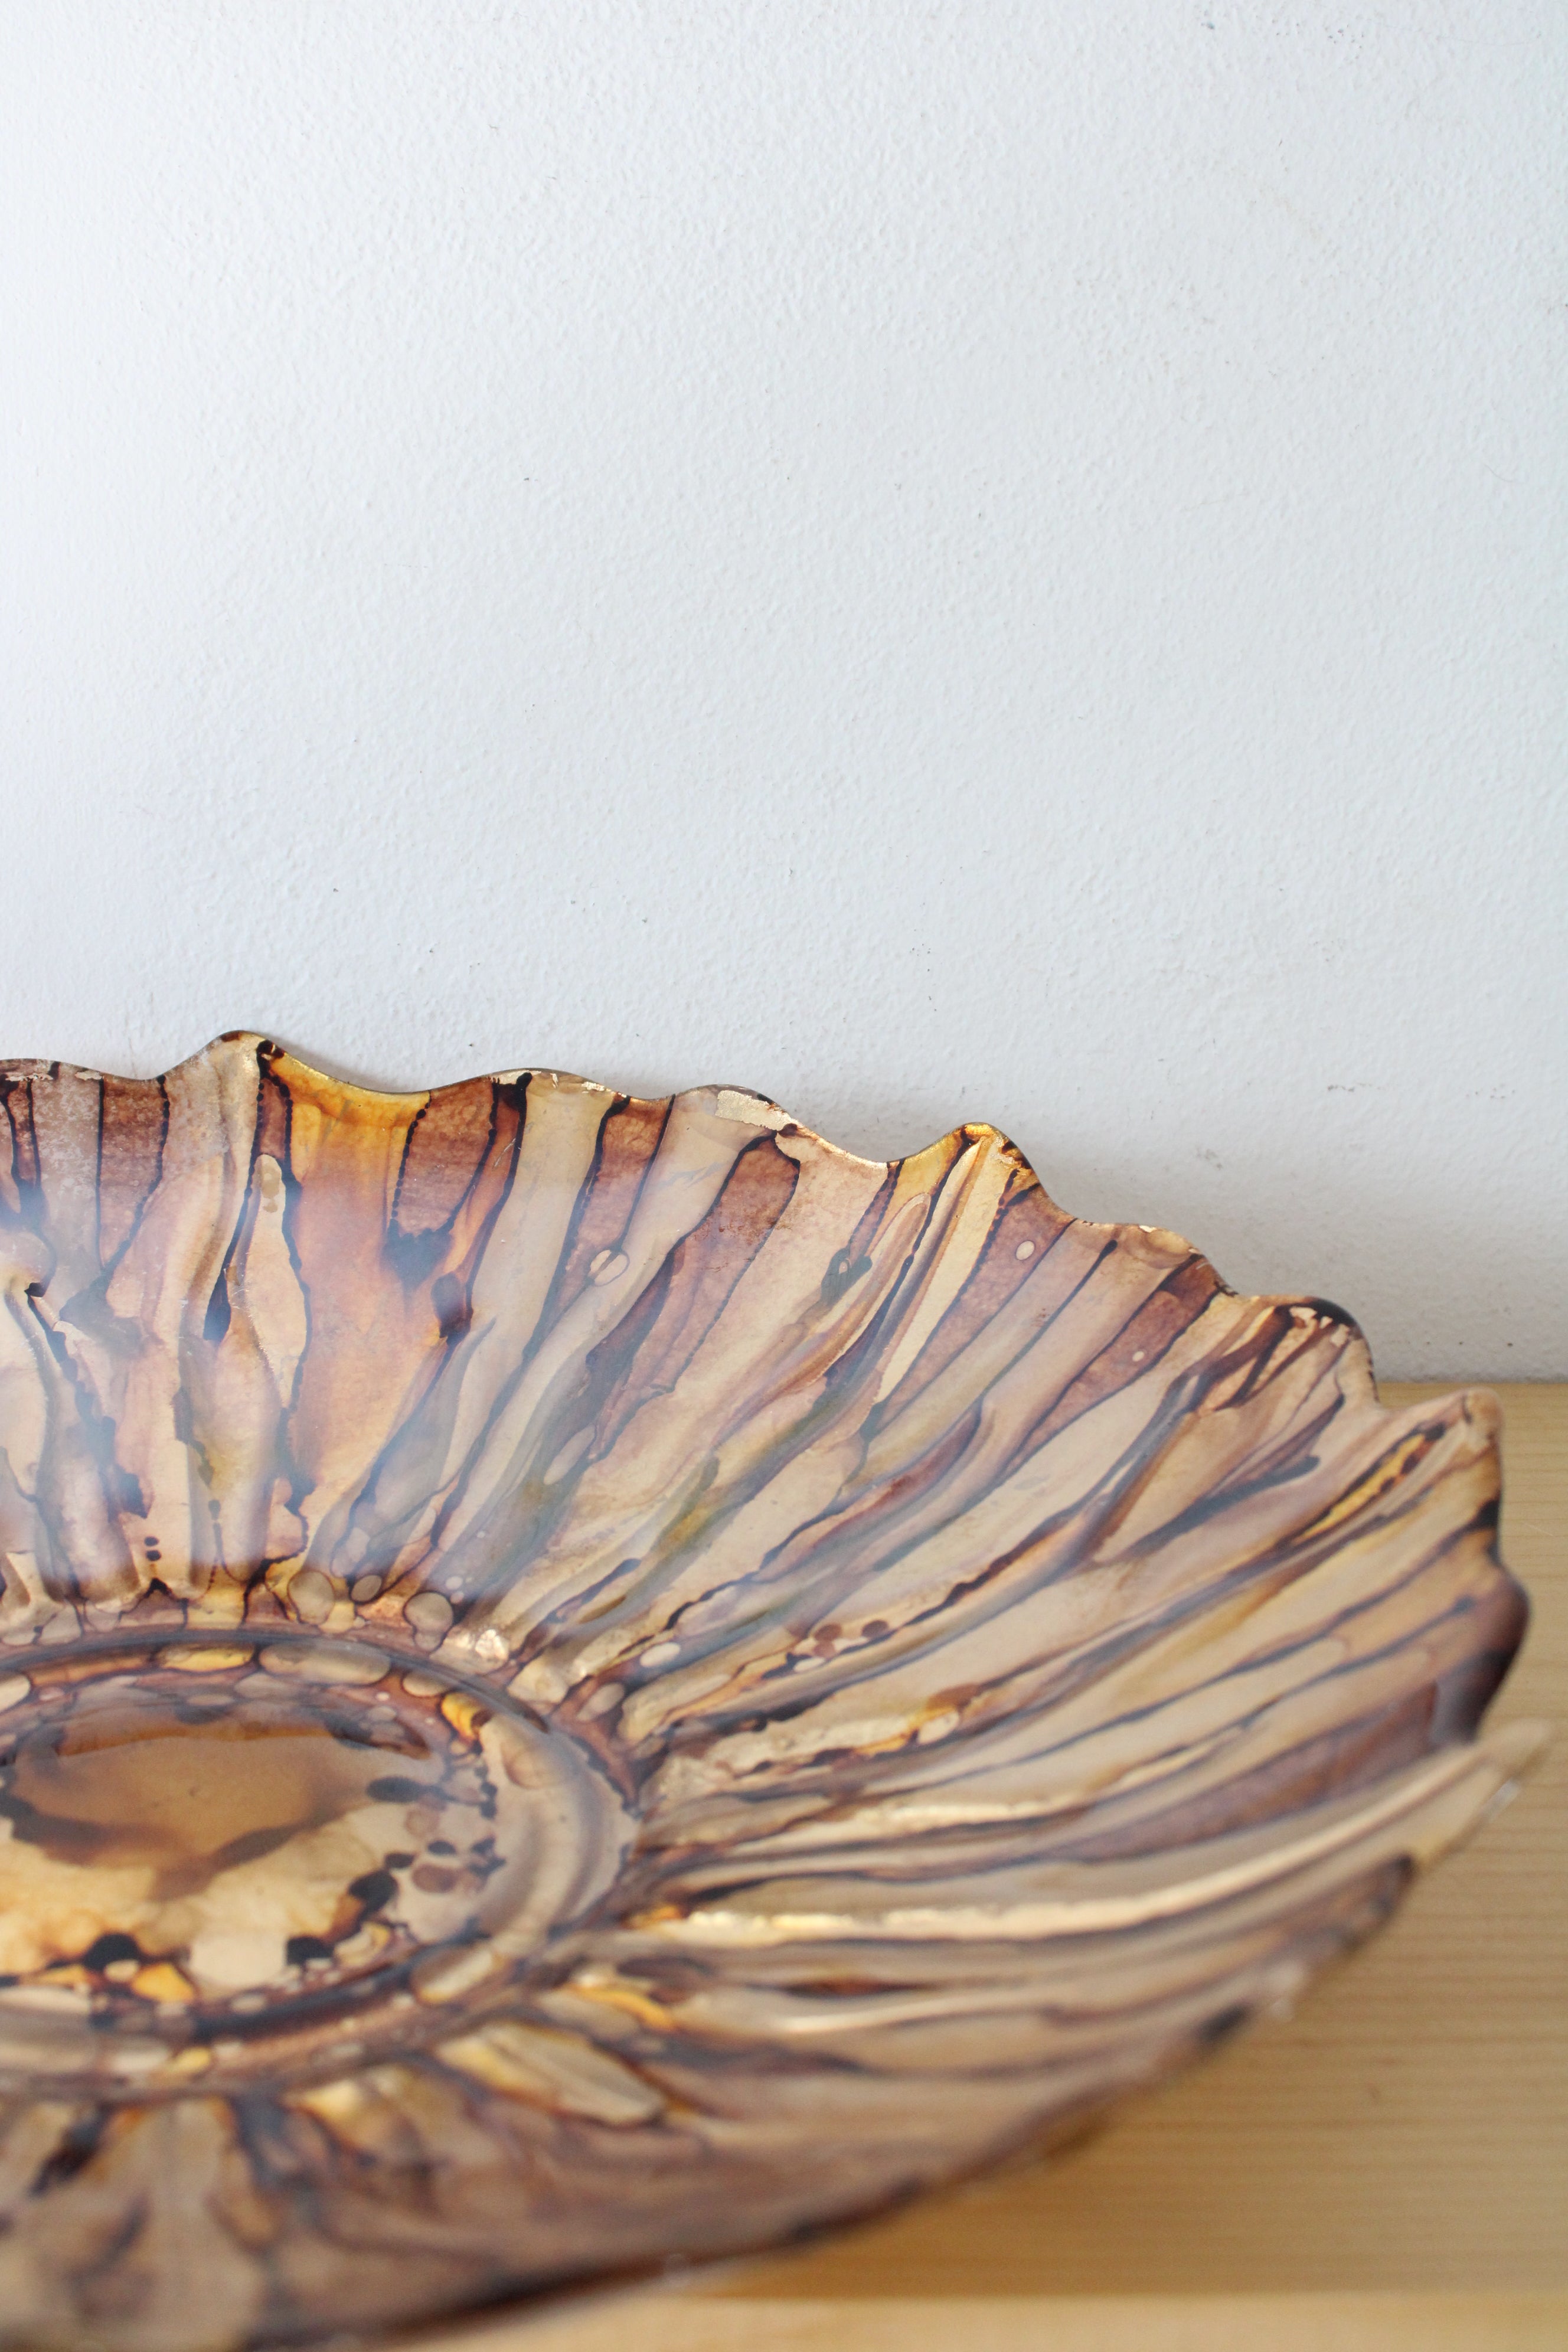 Gold & Brown Wavy Glass Decorative Bowl | 14"